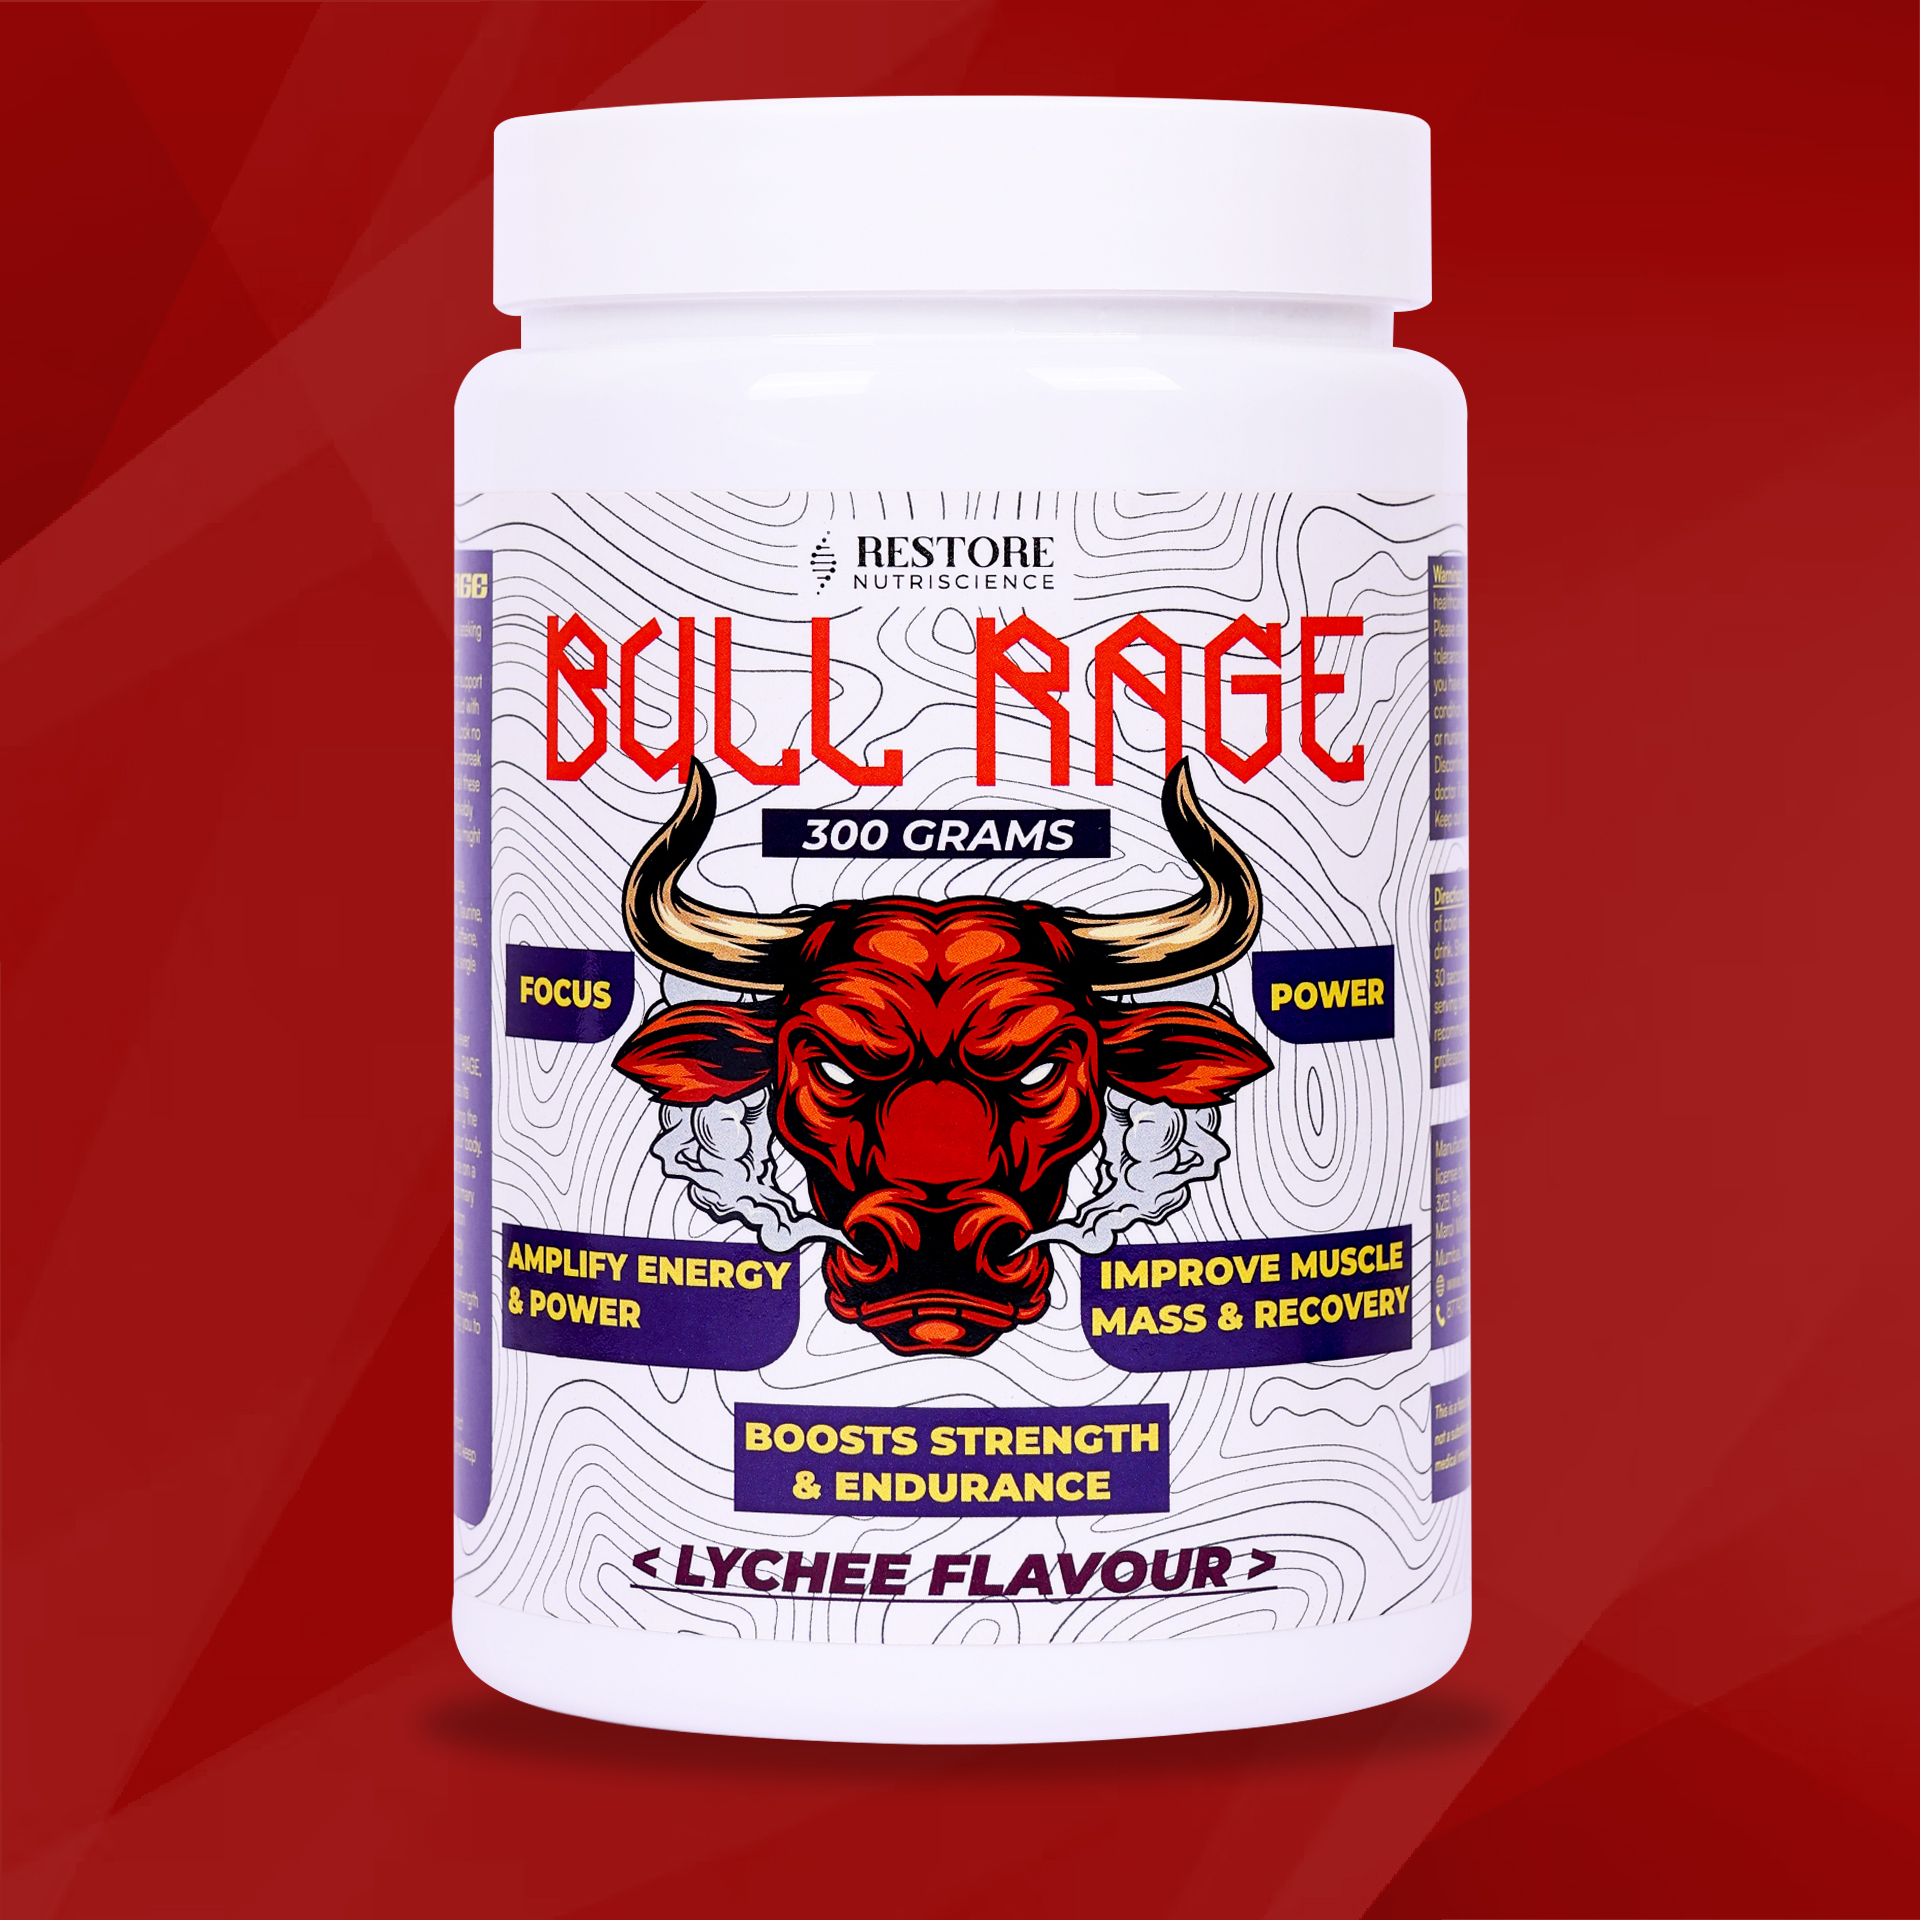 Bull Rage